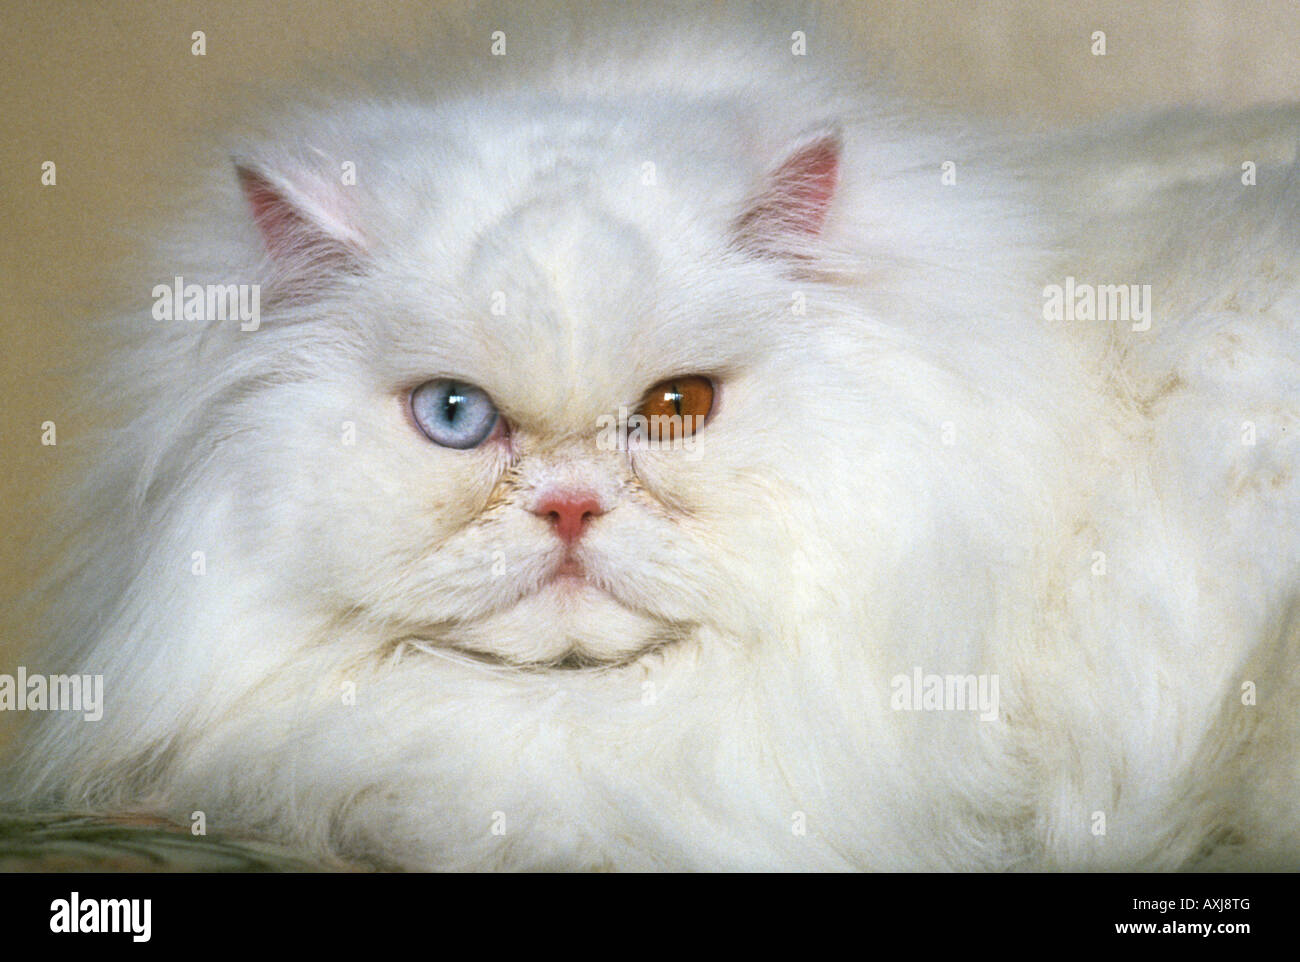 Albino Katzen Mit Seltsam Farbigen Augen Dieser Langhaarige